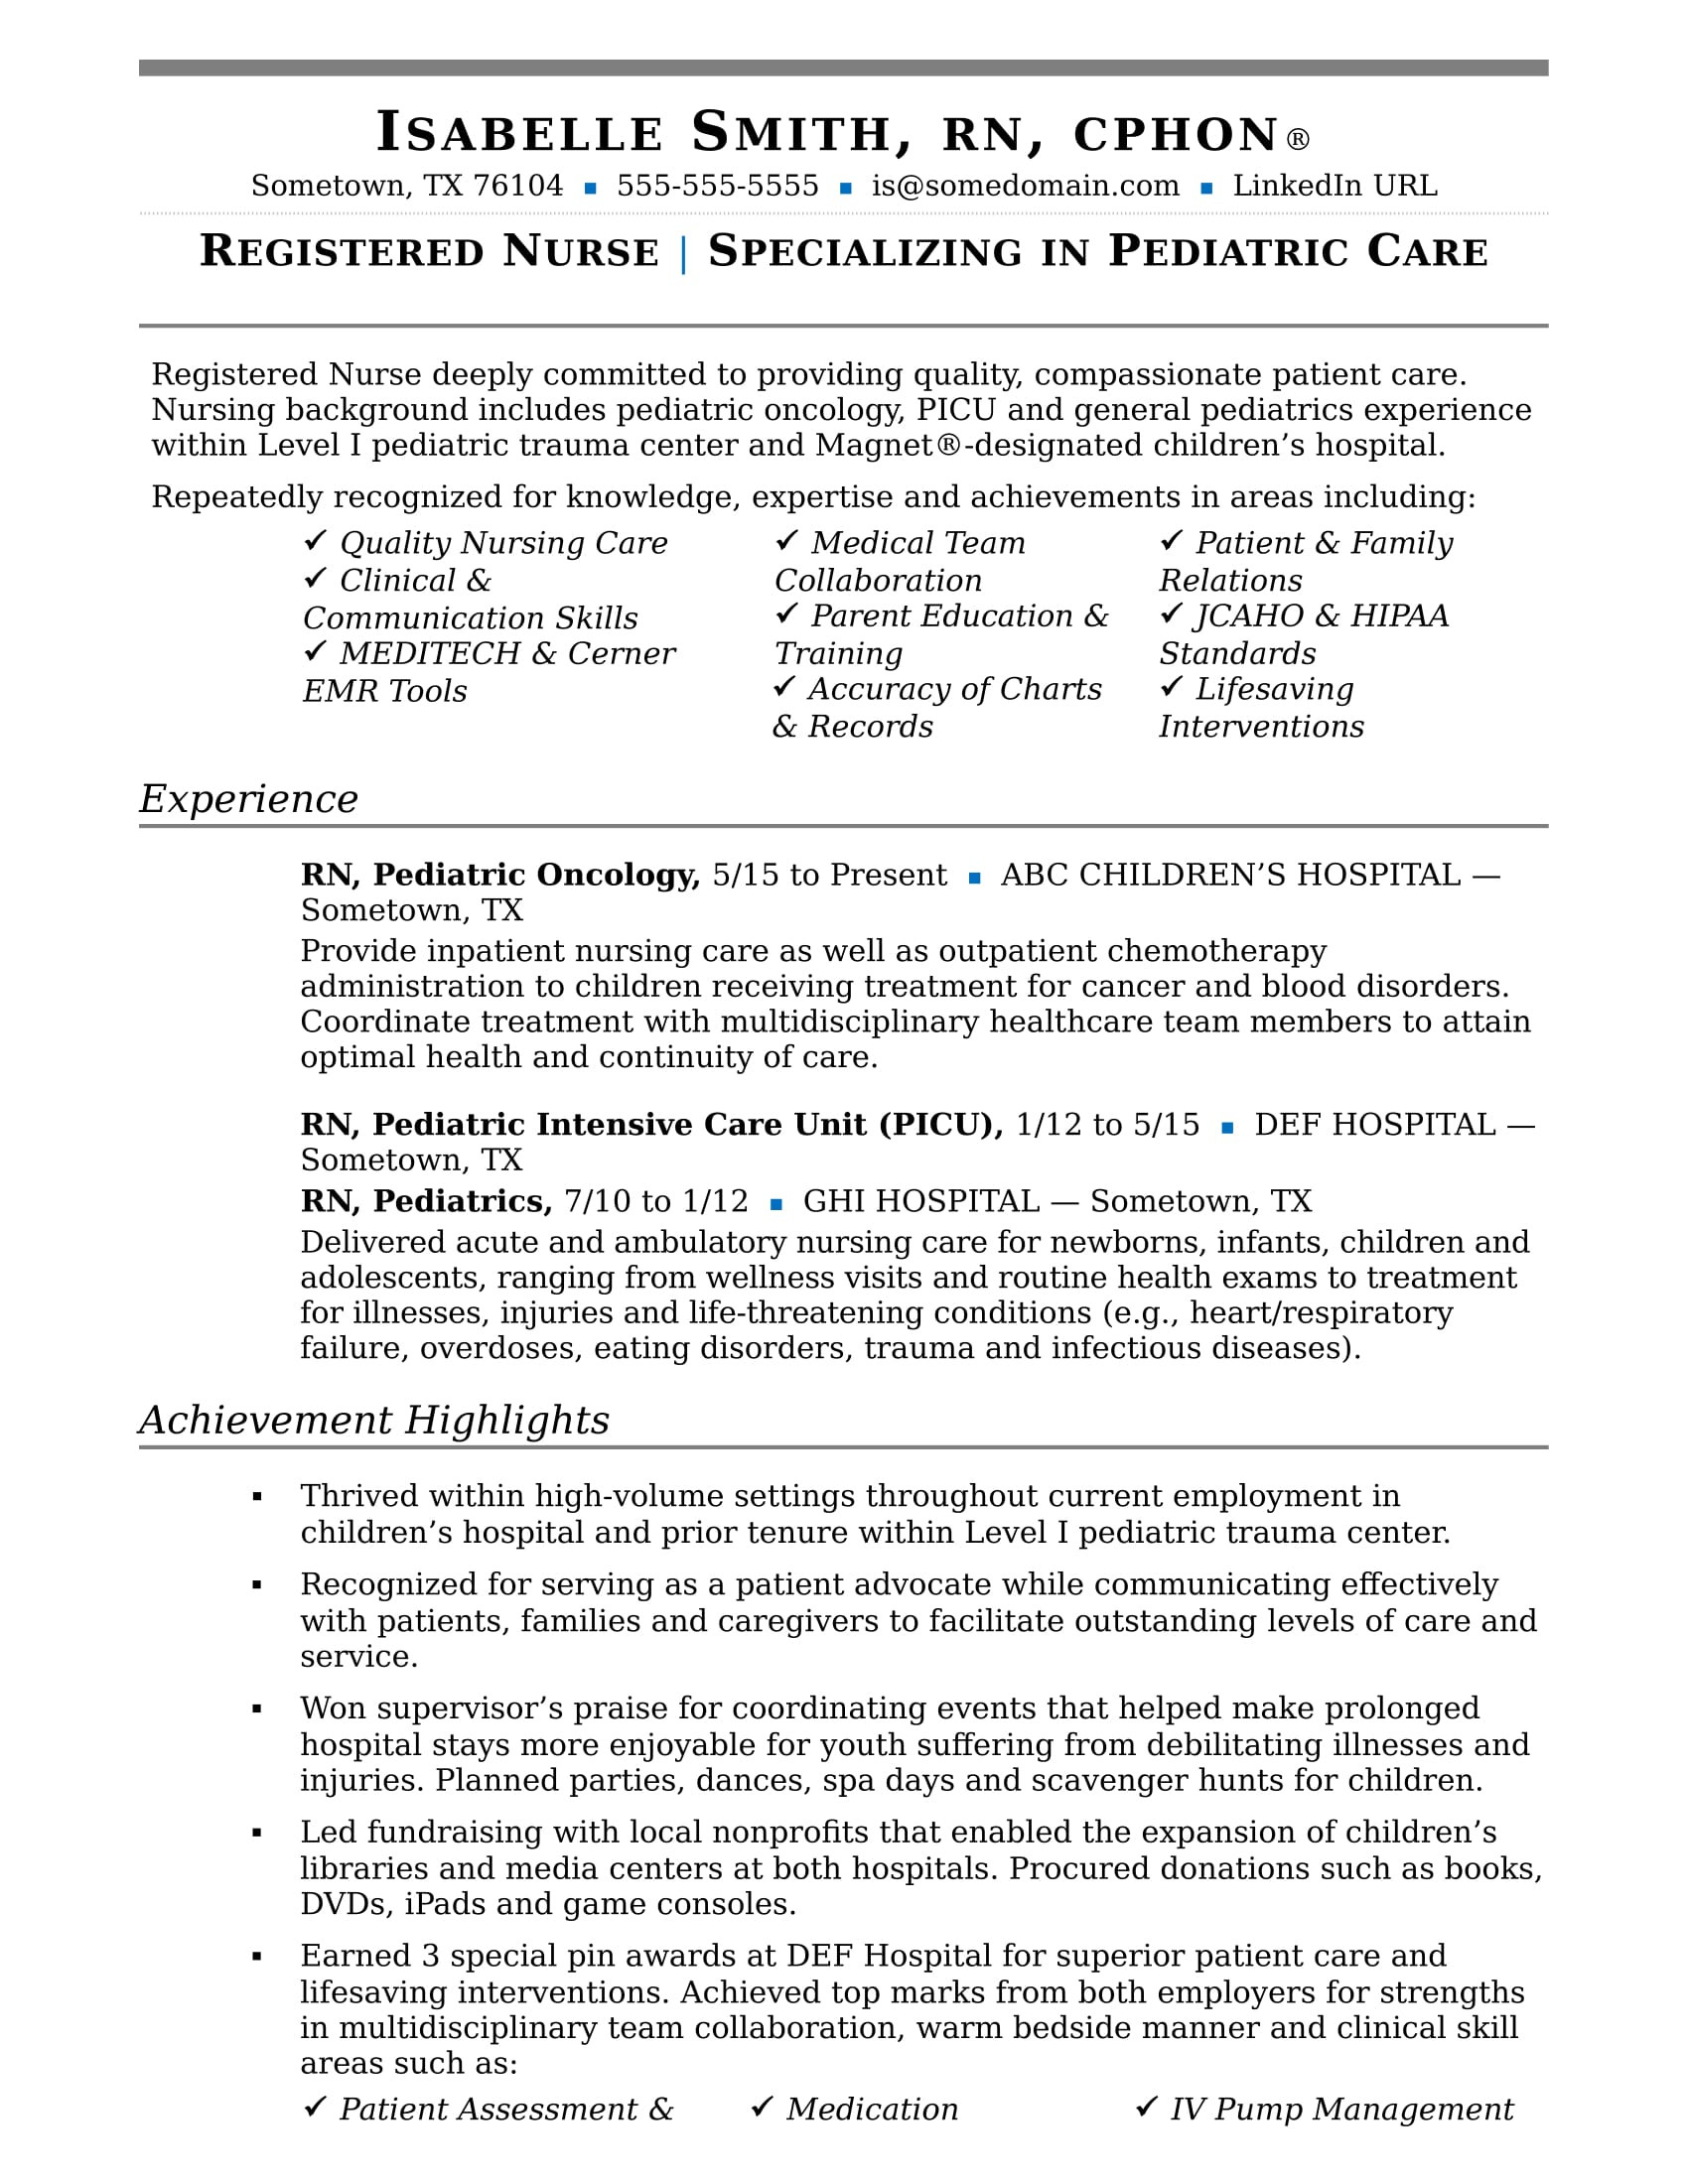 Sample Resume for A Nurse Position Nurse Resume Sample